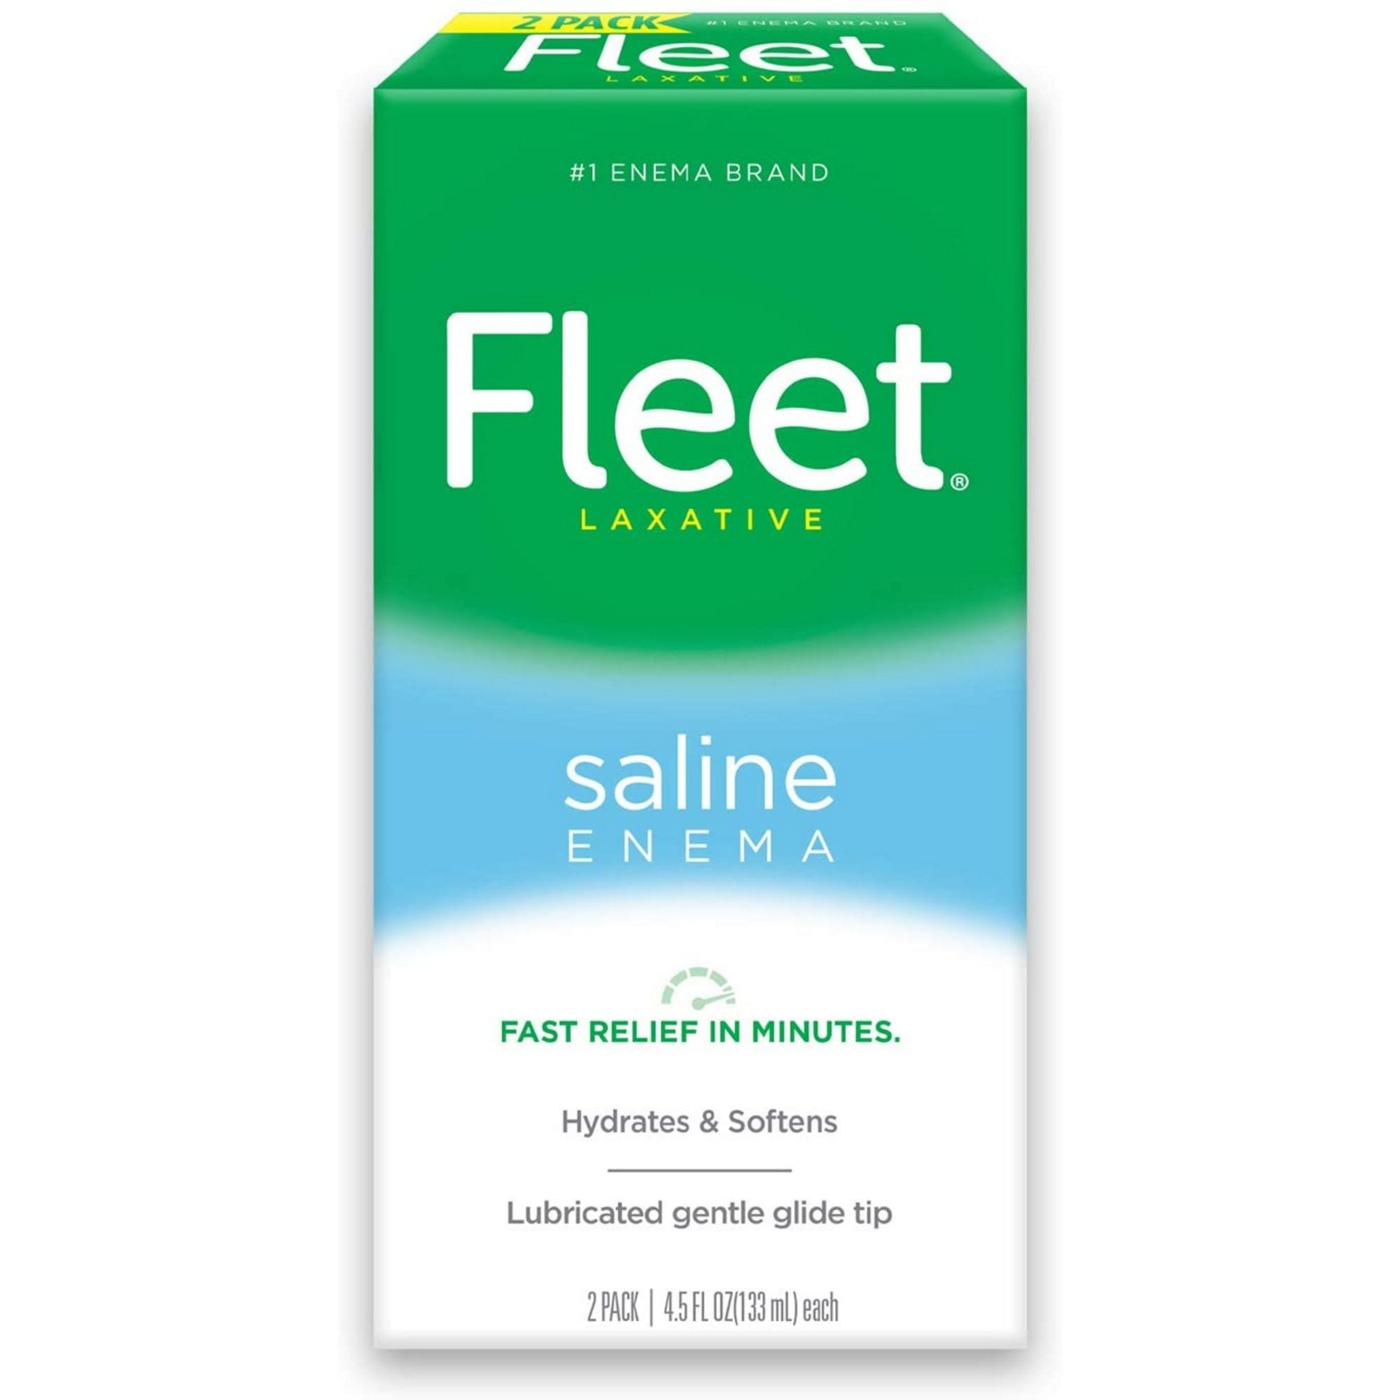 Fleet Laxative Saline Enema with Gentle Glide Tip; image 1 of 5